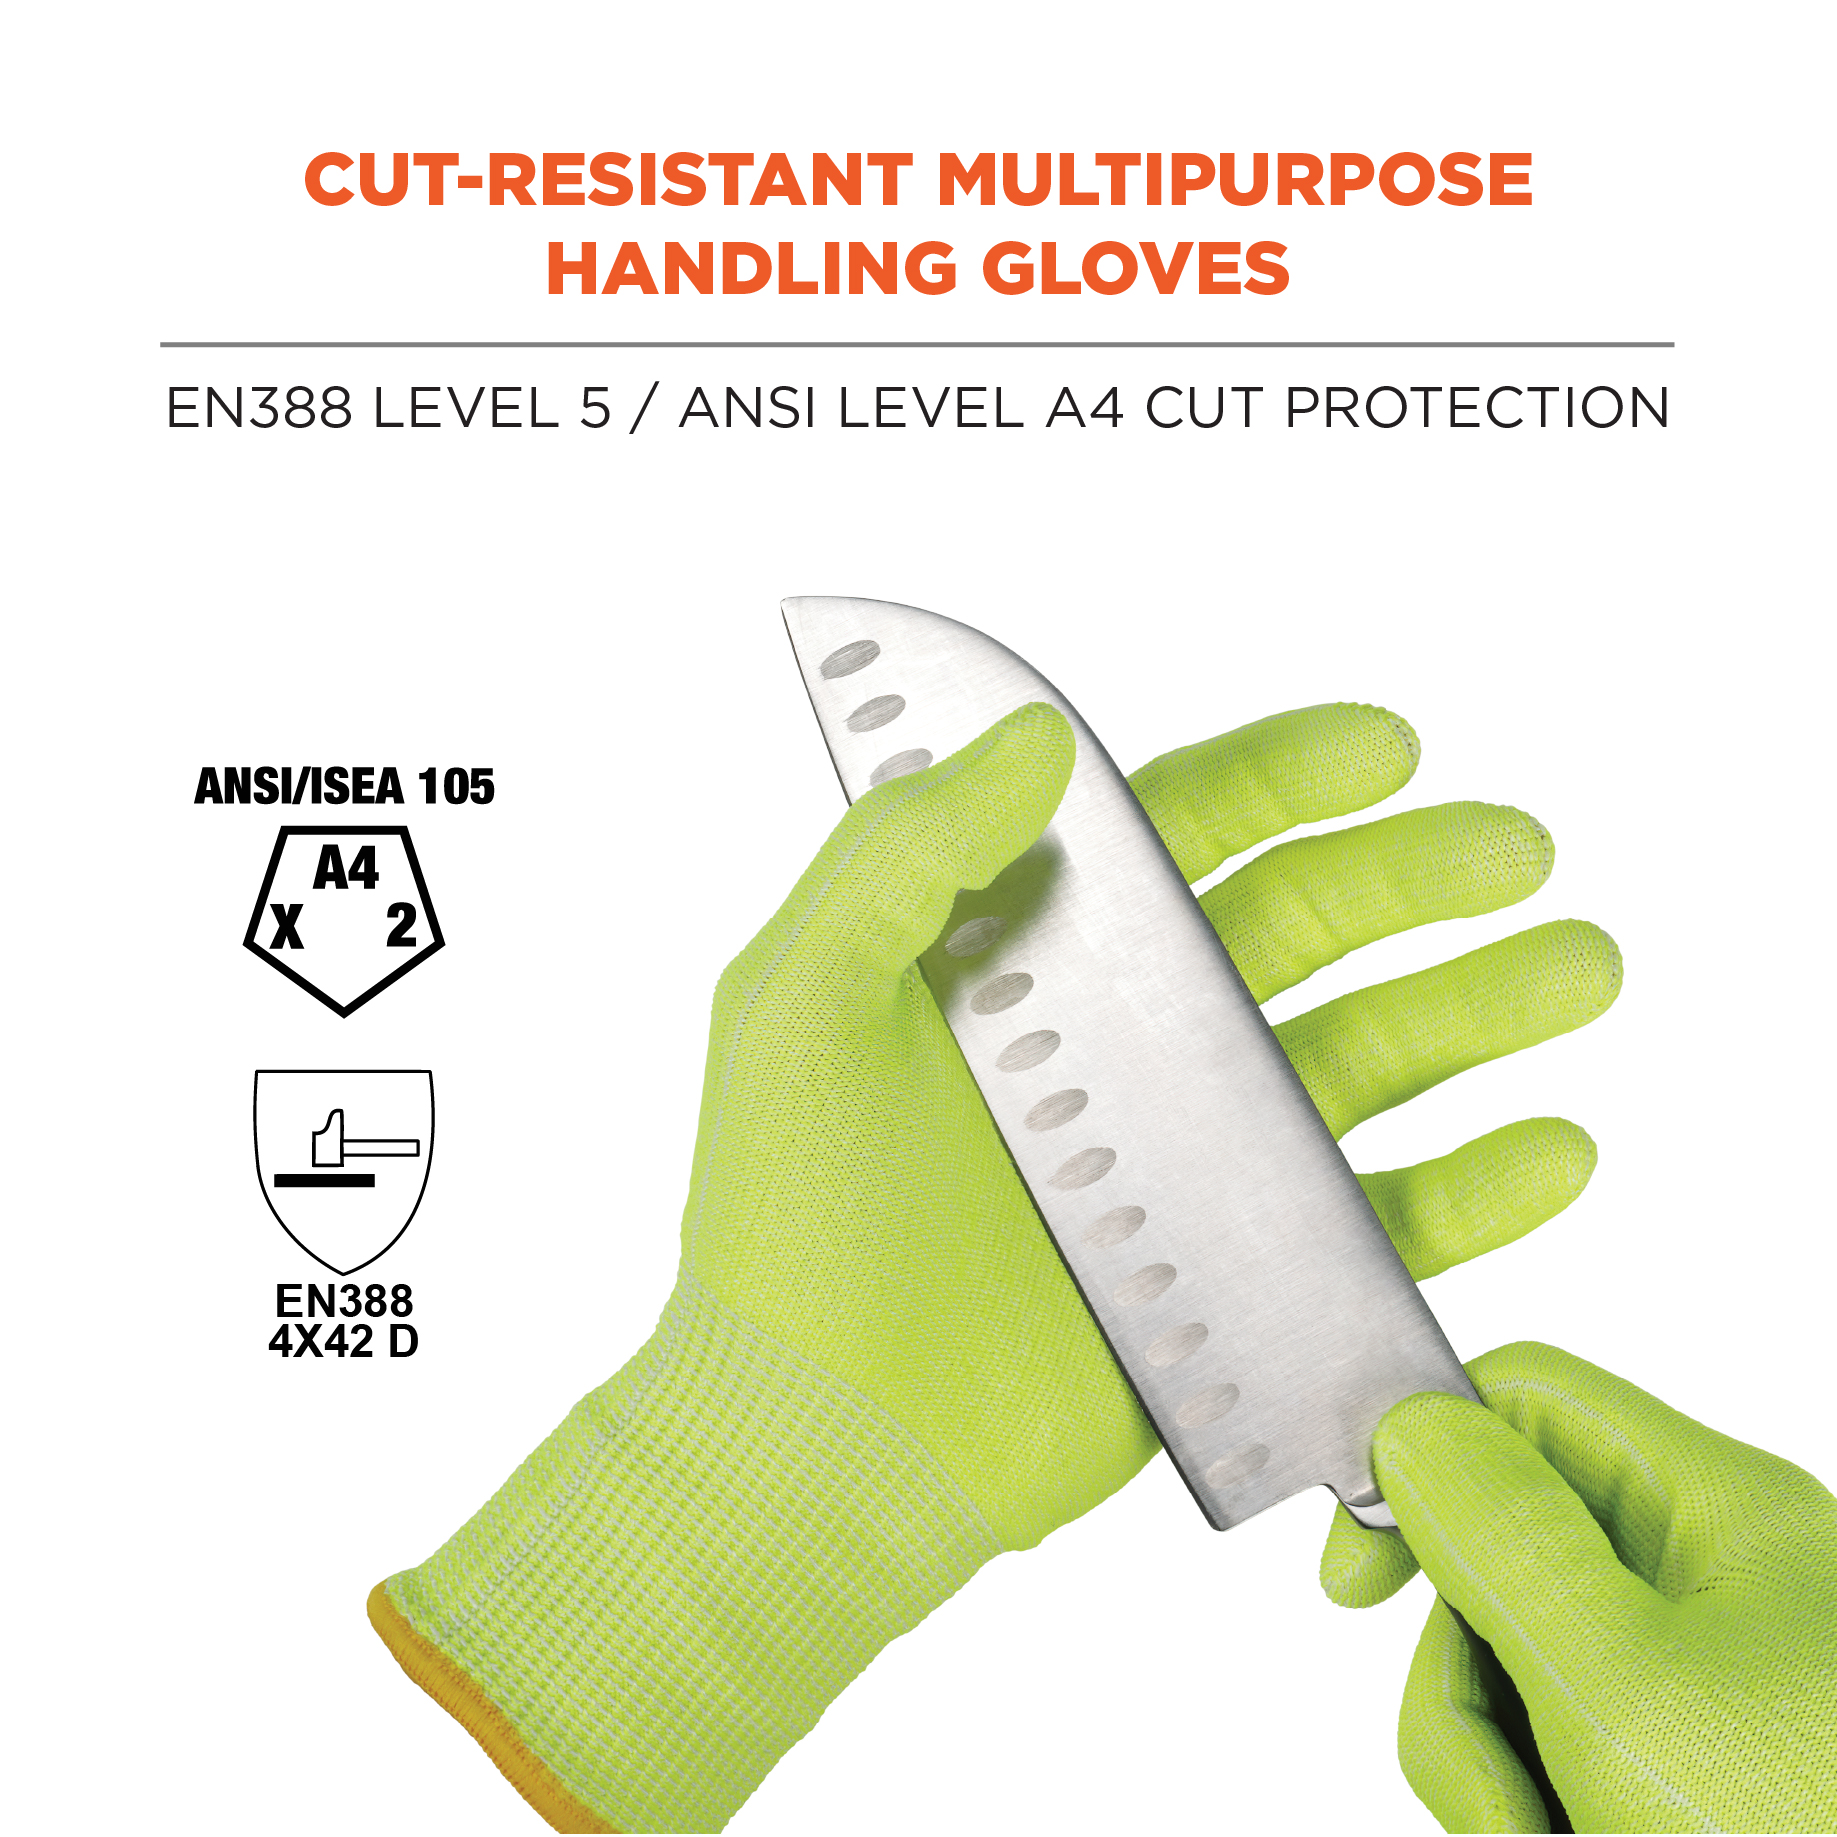 https://www.ergodyne.com/sites/default/files/product-images/18012-7040-cut-resistant-food-grade-gloves-lime-cut-resistant-multipurpose-handling-gloves_0.jpg